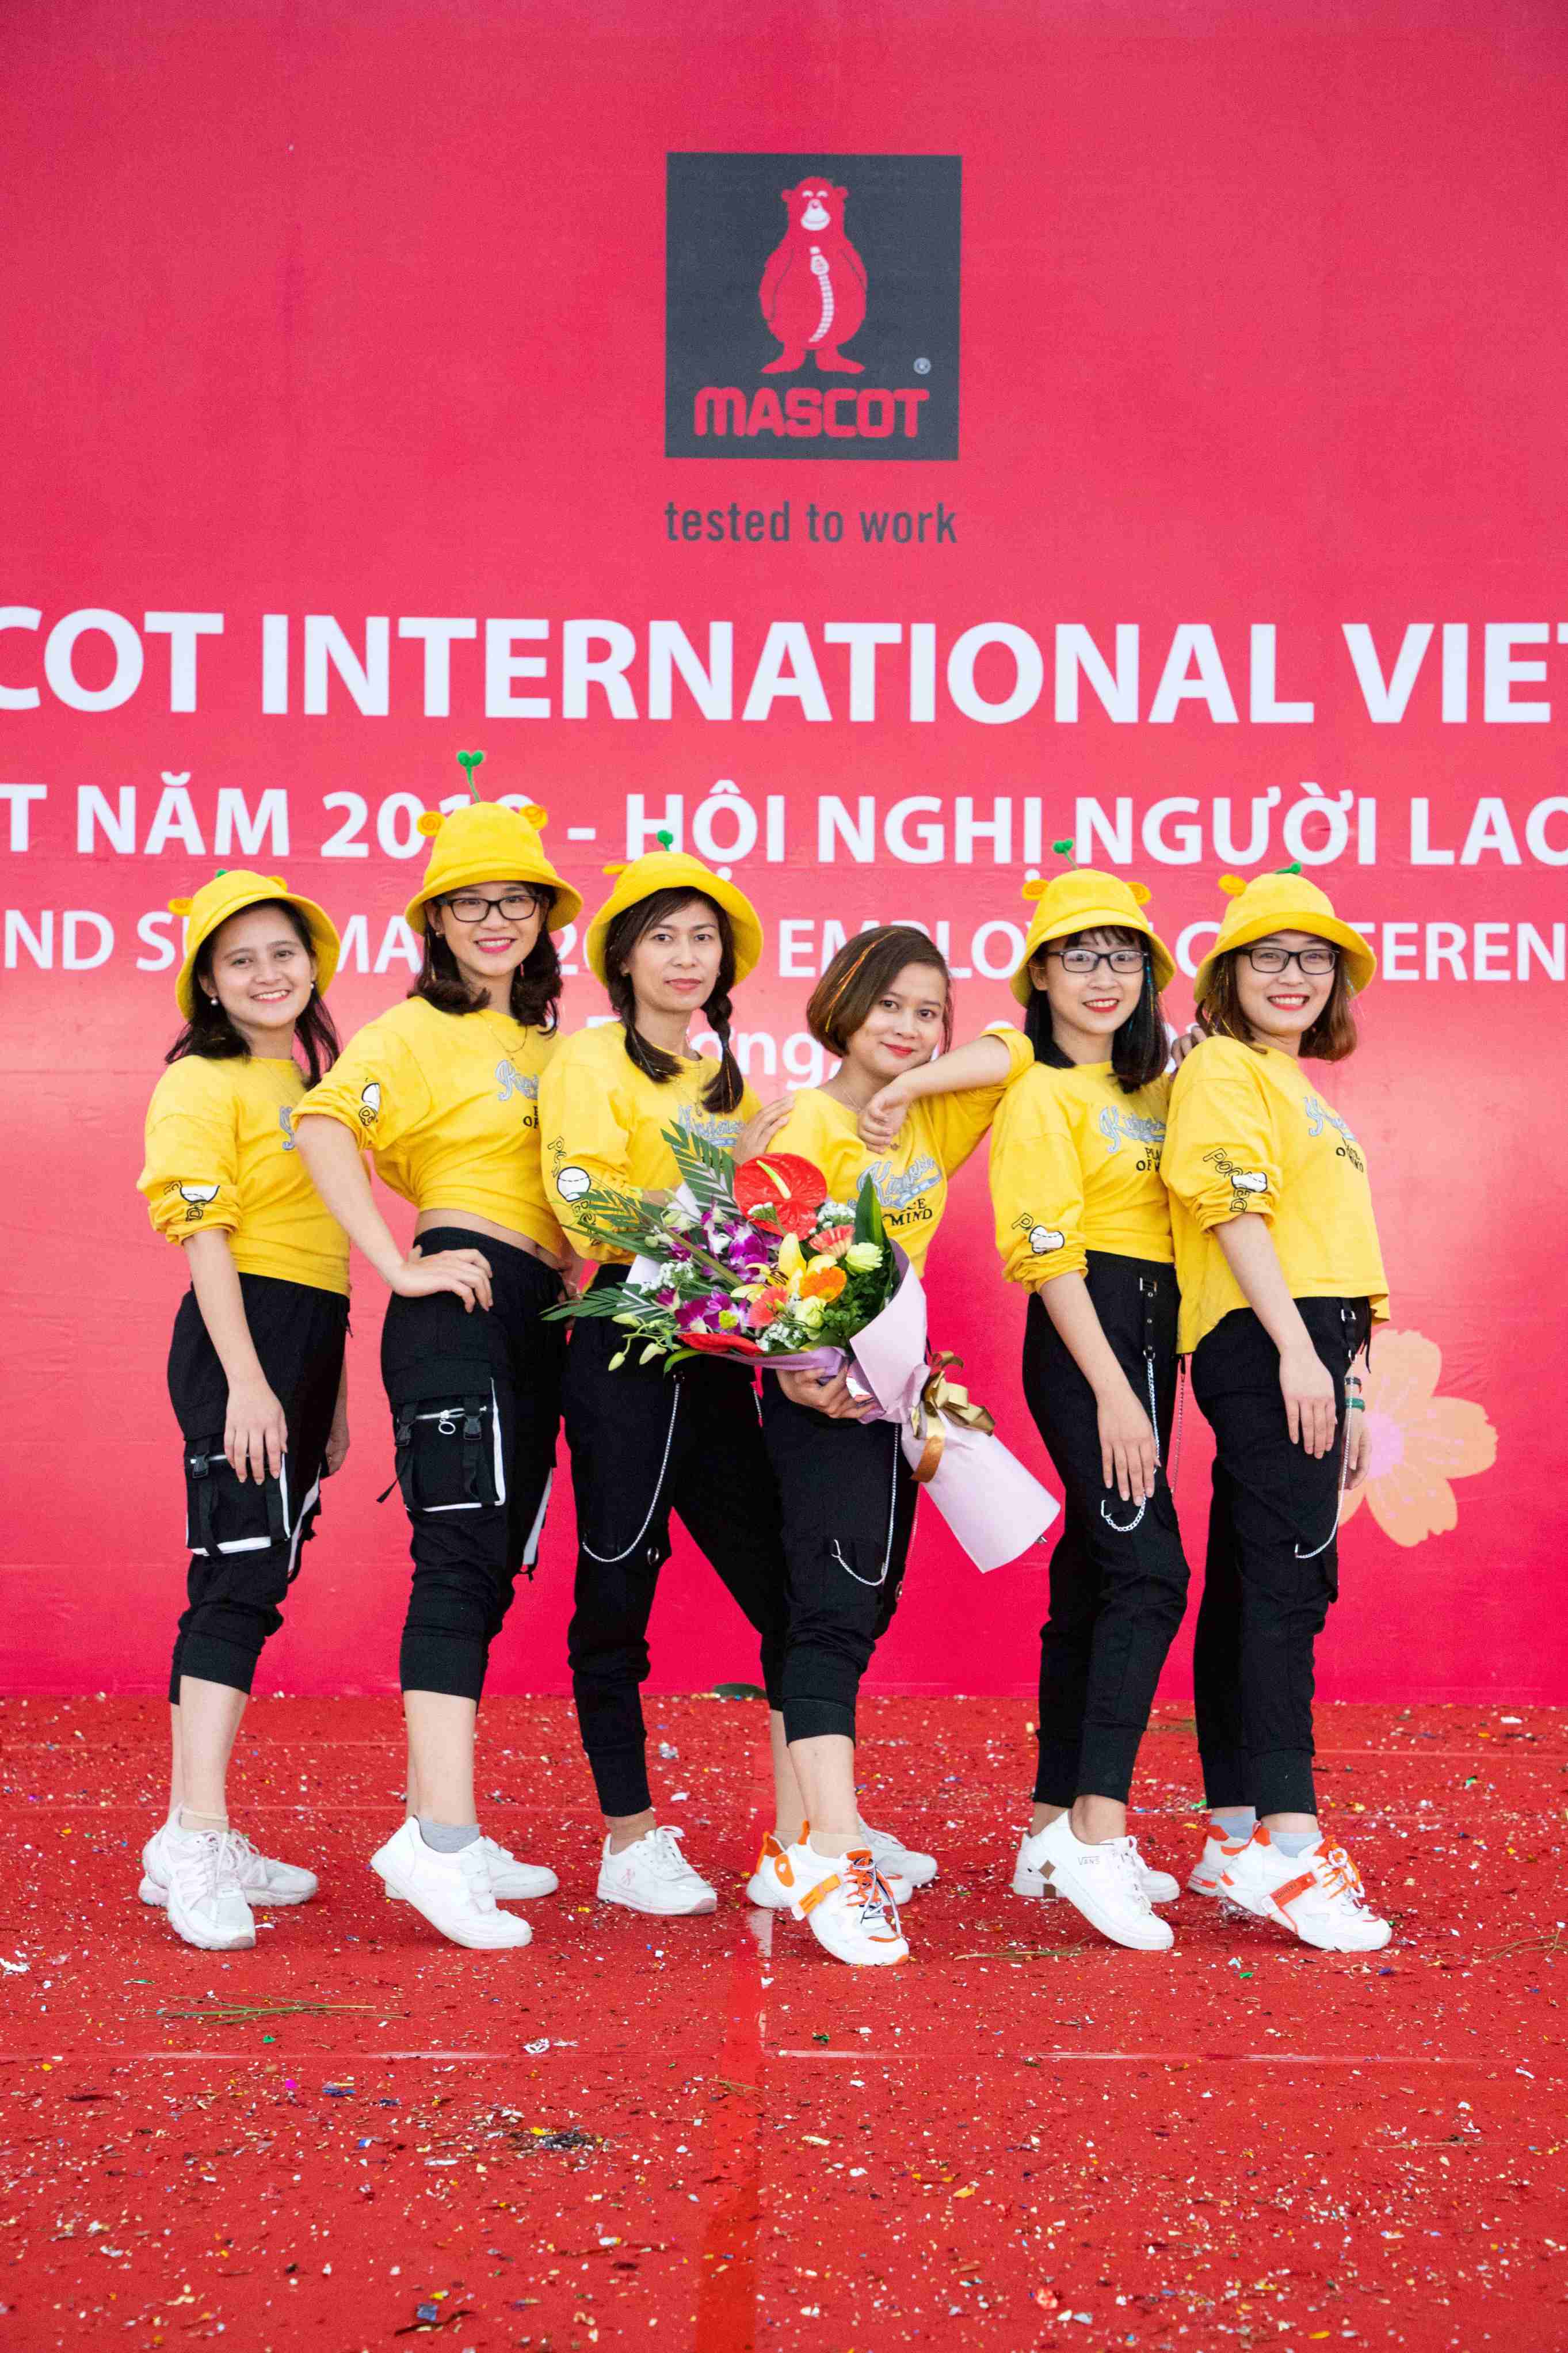 Jobs at Mascot International Vietnam